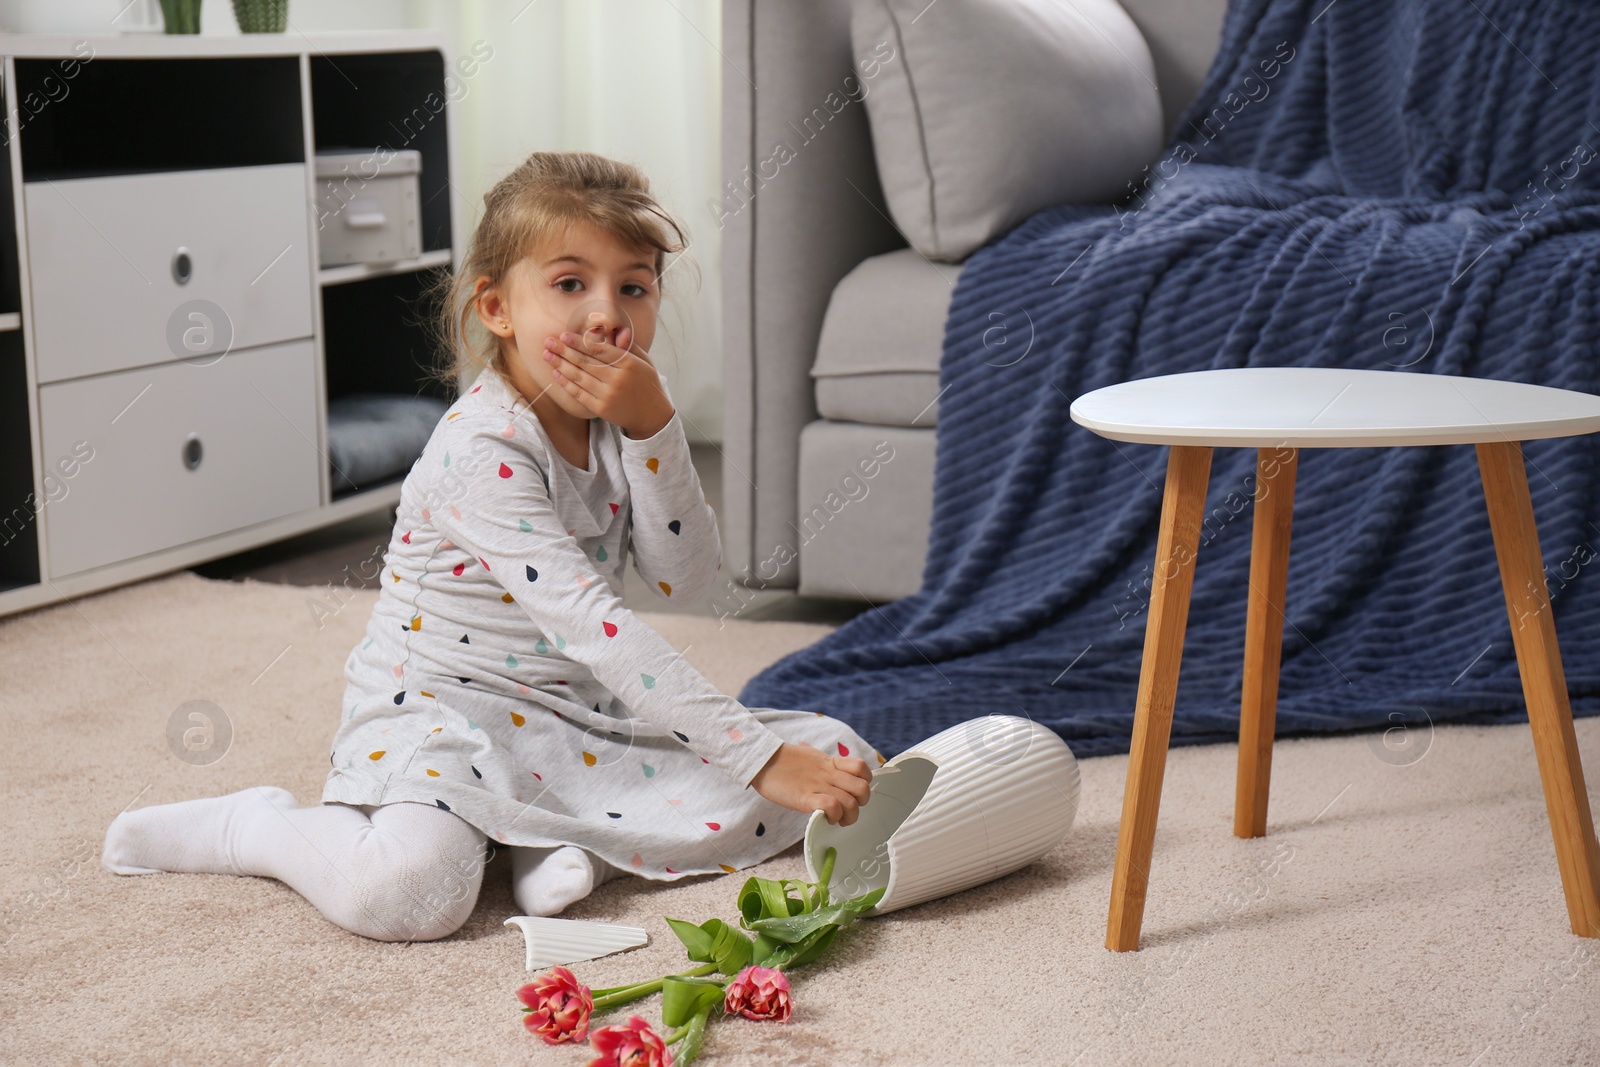 Photo of Emotional little girl and broken ceramic vase on floor at home